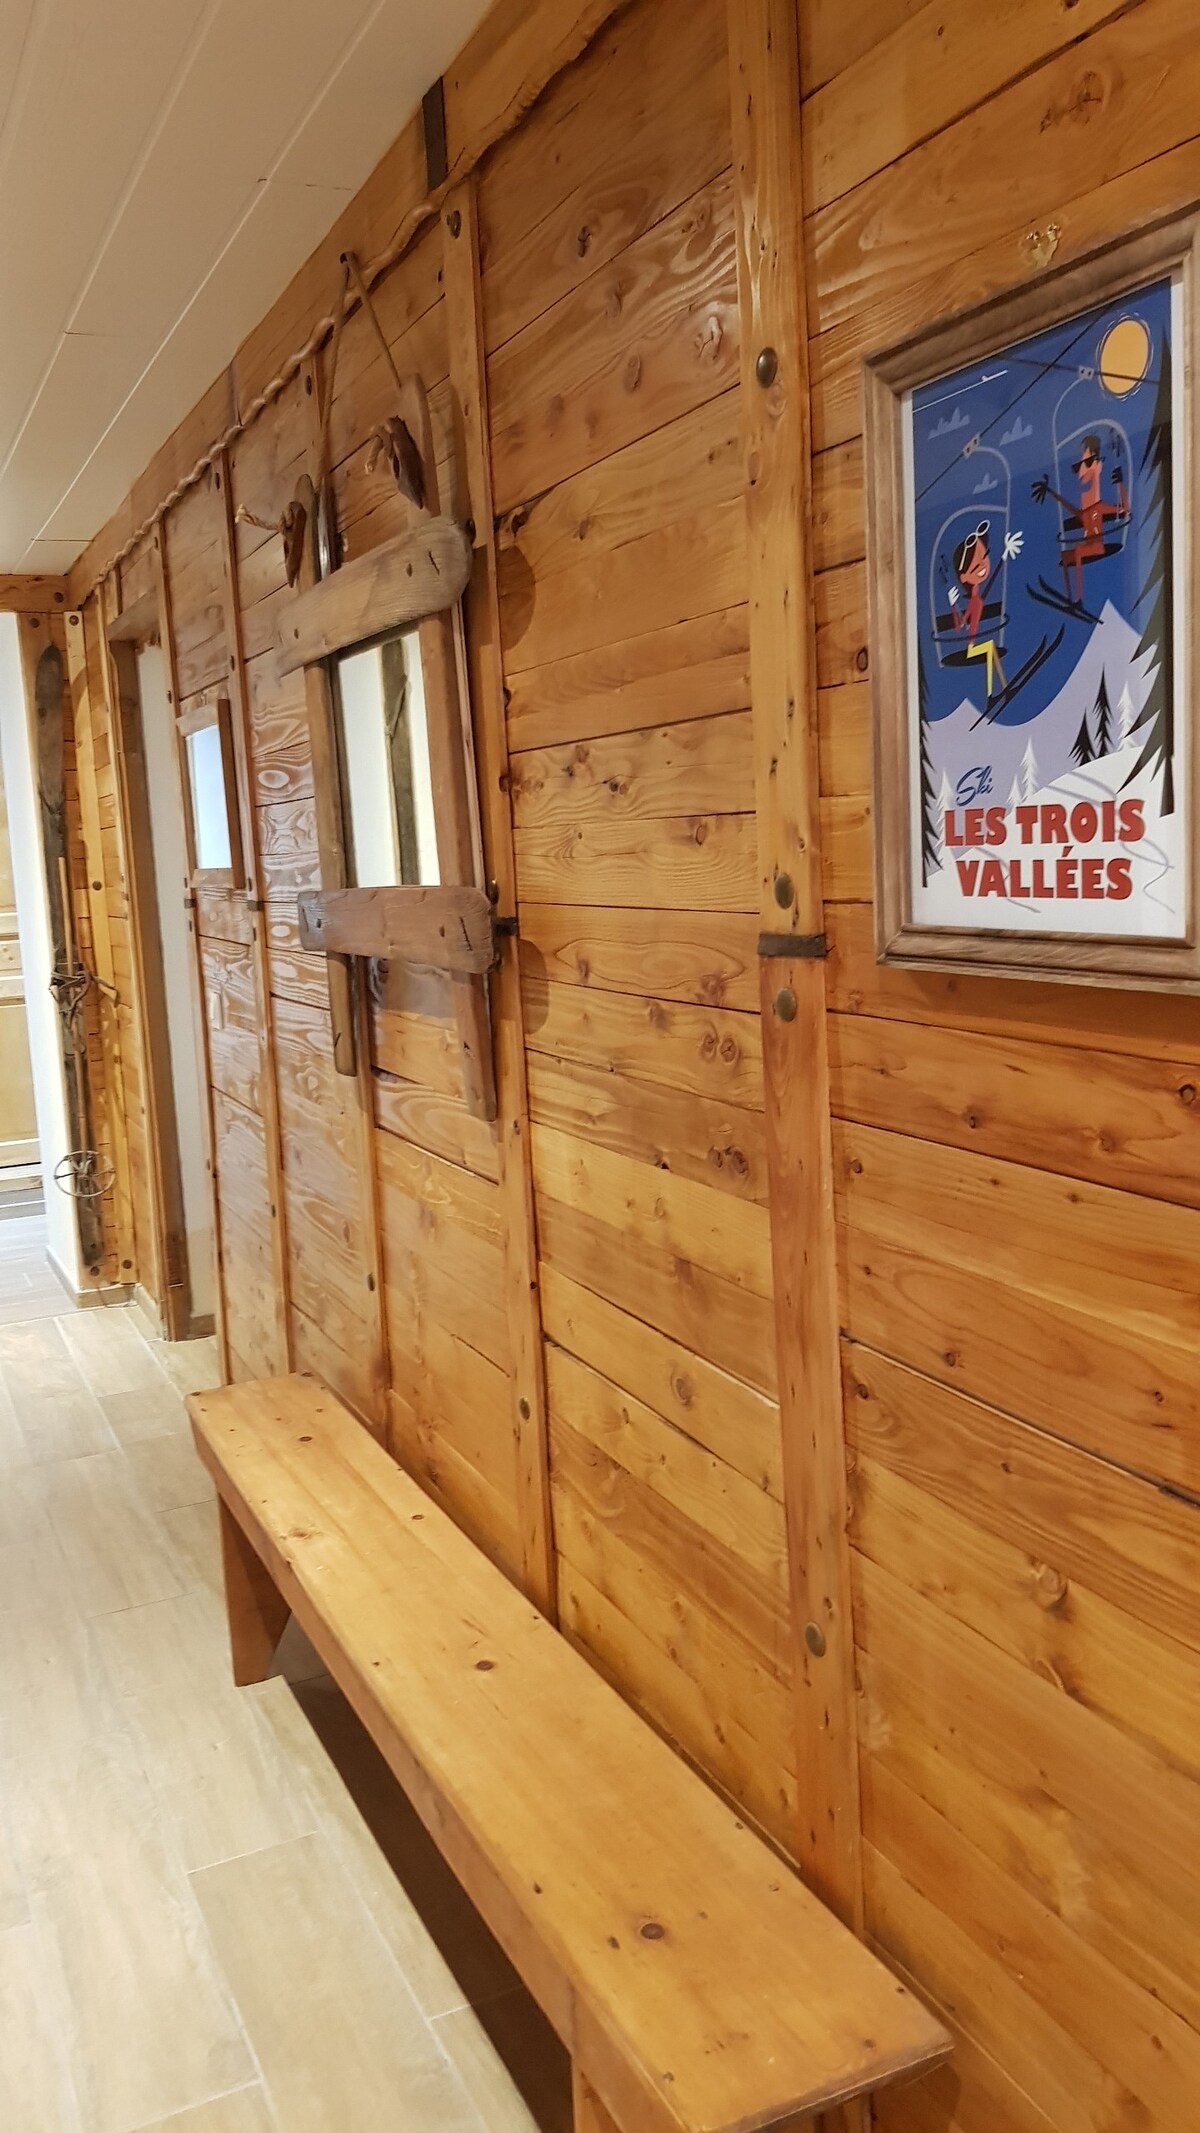 6pers-2bedroom-ski 3 Vallées - WIFI&linen includ